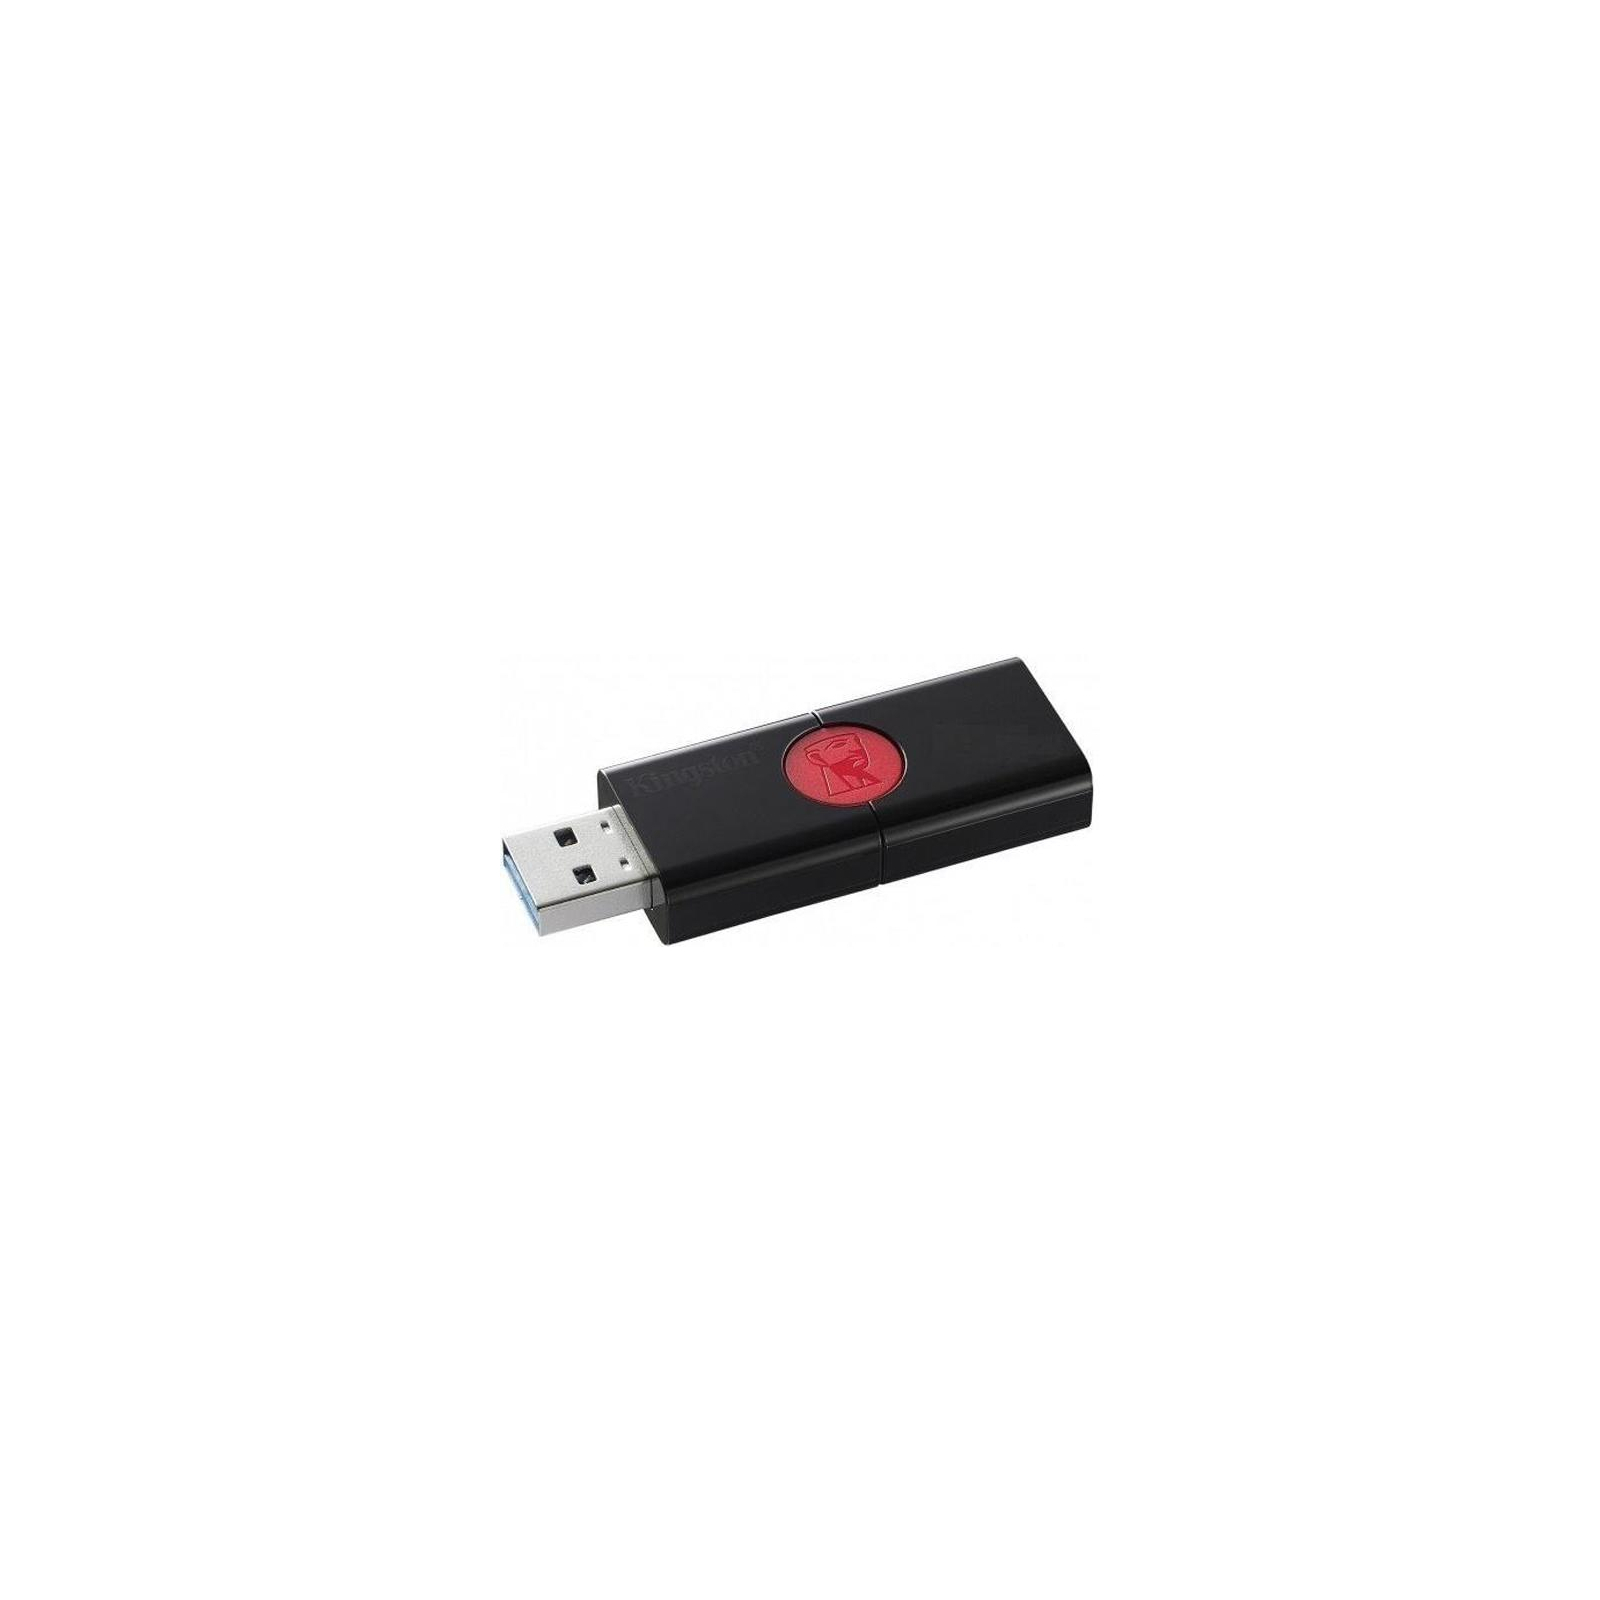 USB флеш накопитель Kingston 256GB DT106 USB 3.0 (DT106/256GB) изображение 4